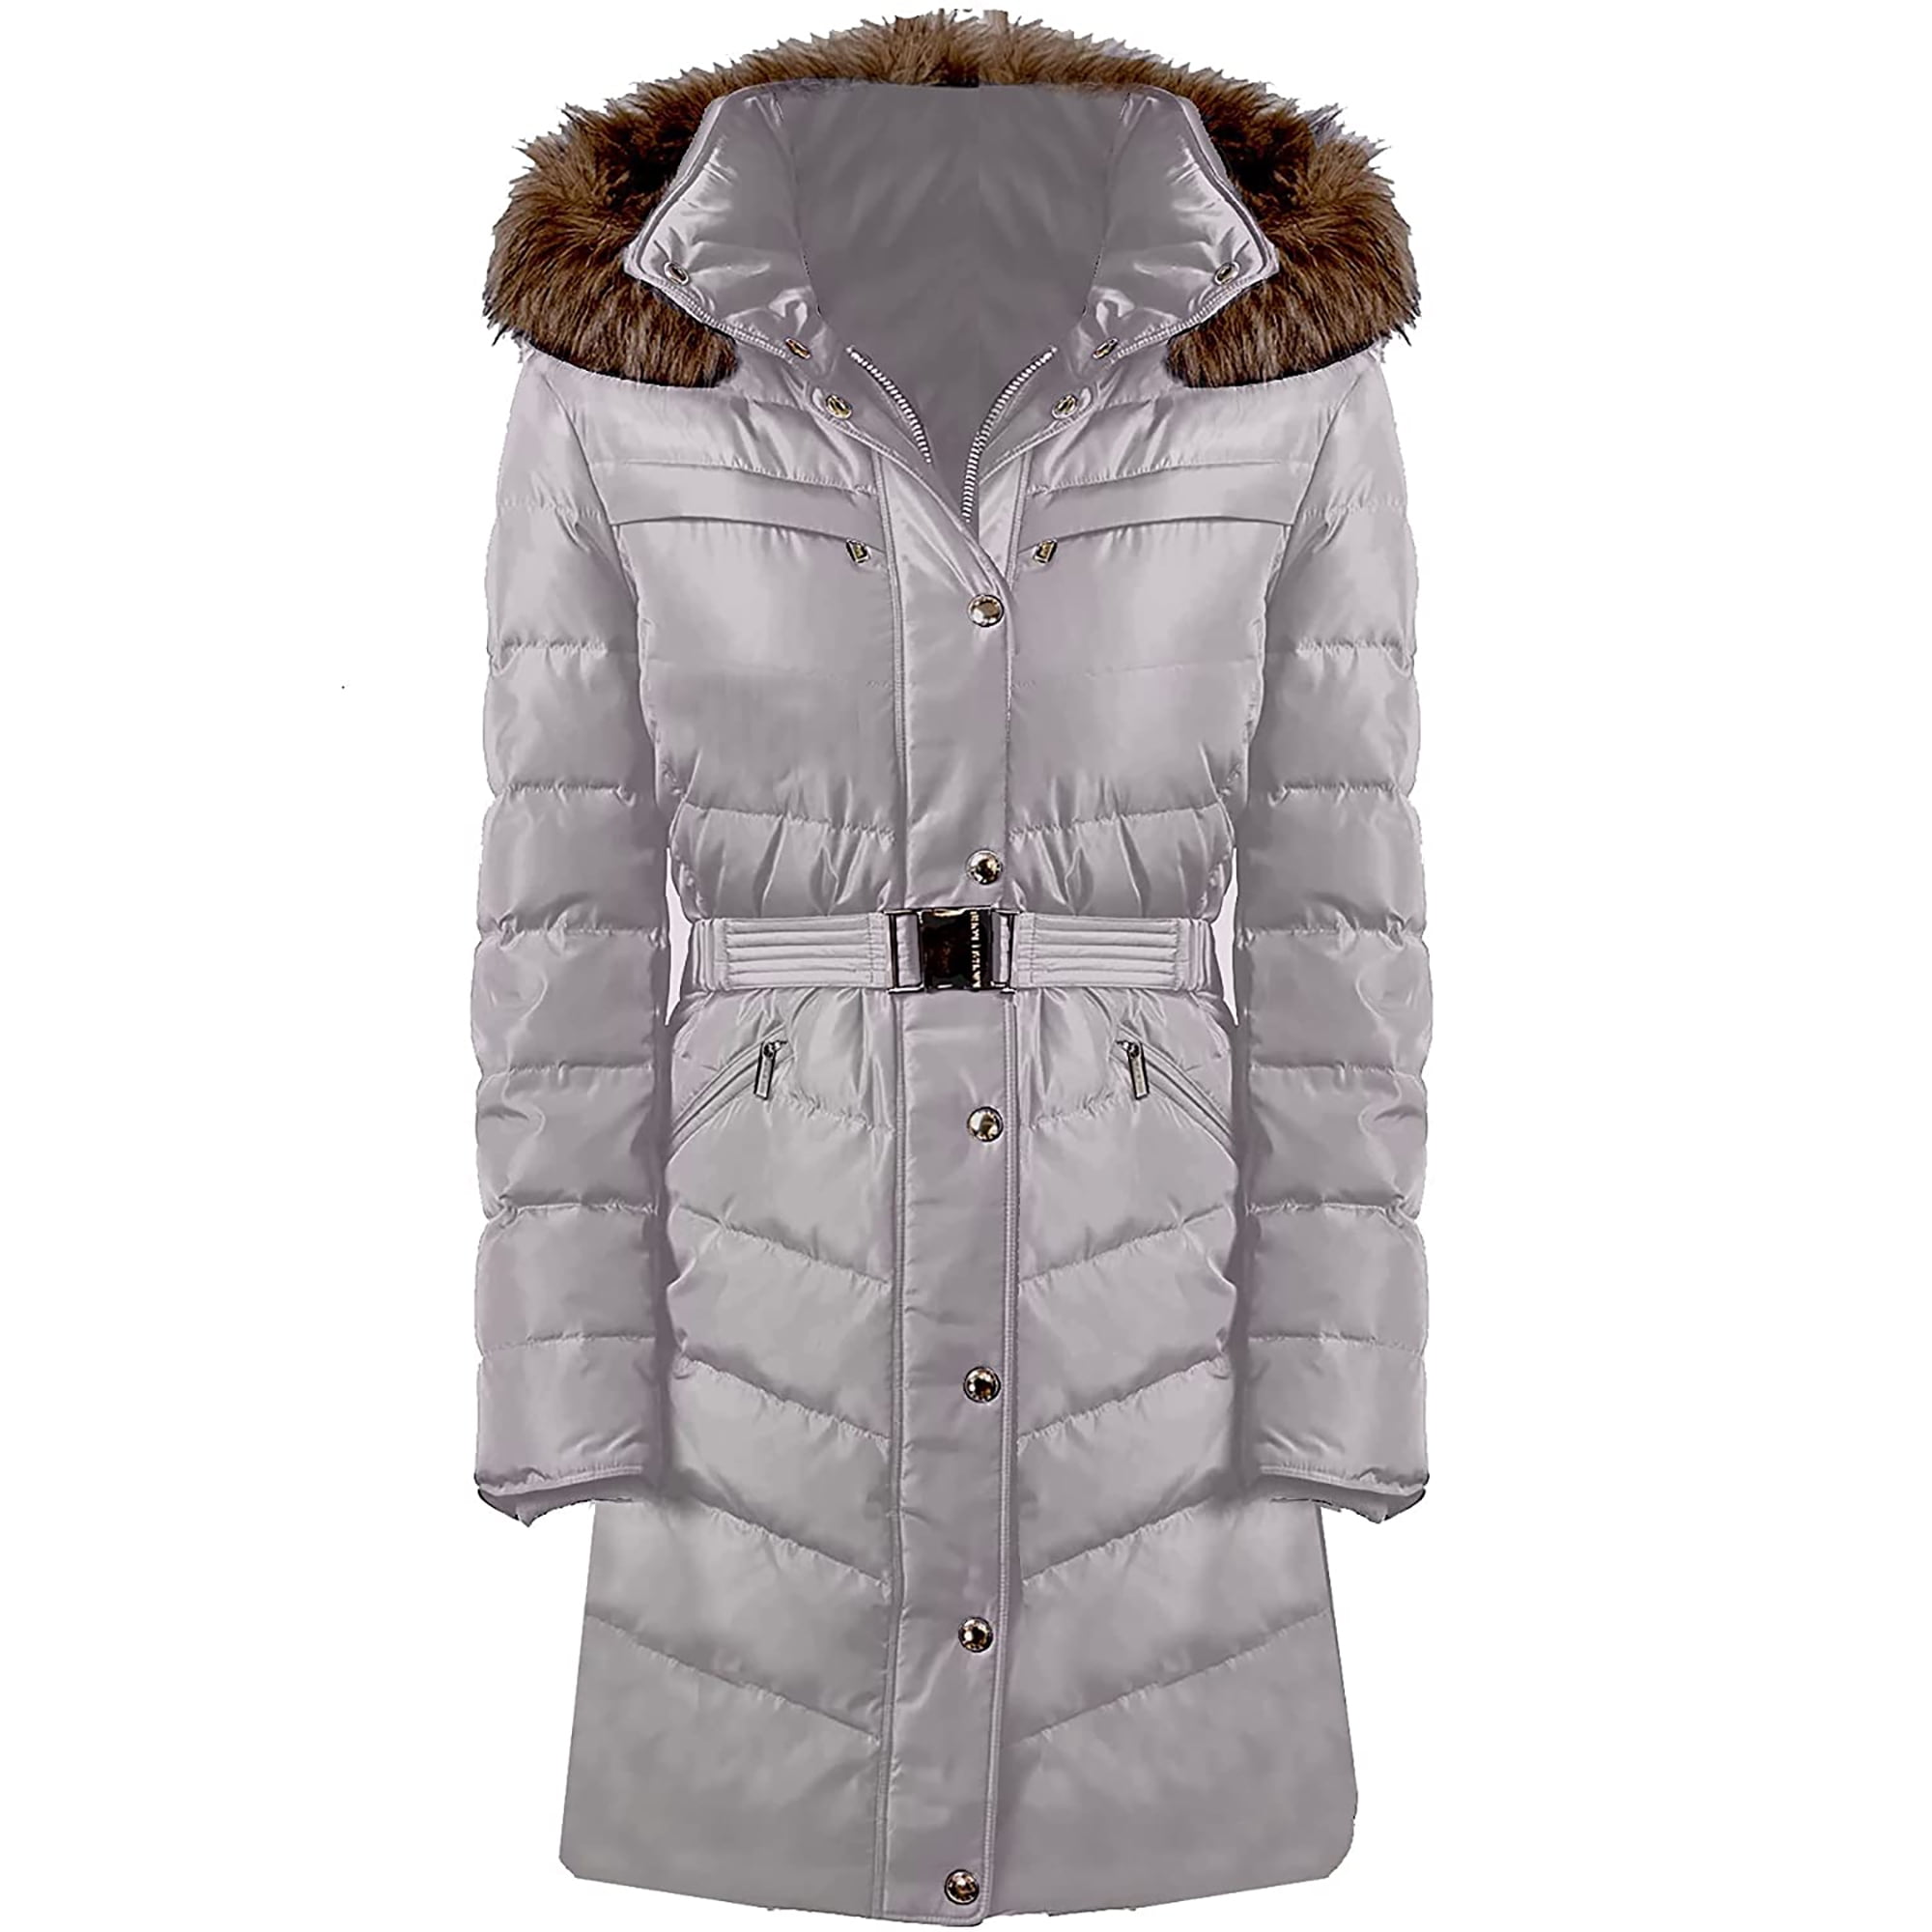 Michael Kors Women's Down Coat – Light Gray Puffer Coat for Women - Zipper  Closure Women Winter Coat - Imported Women Down Coat with Faux Fur Trim On  Hood & 4 Side Pockets 